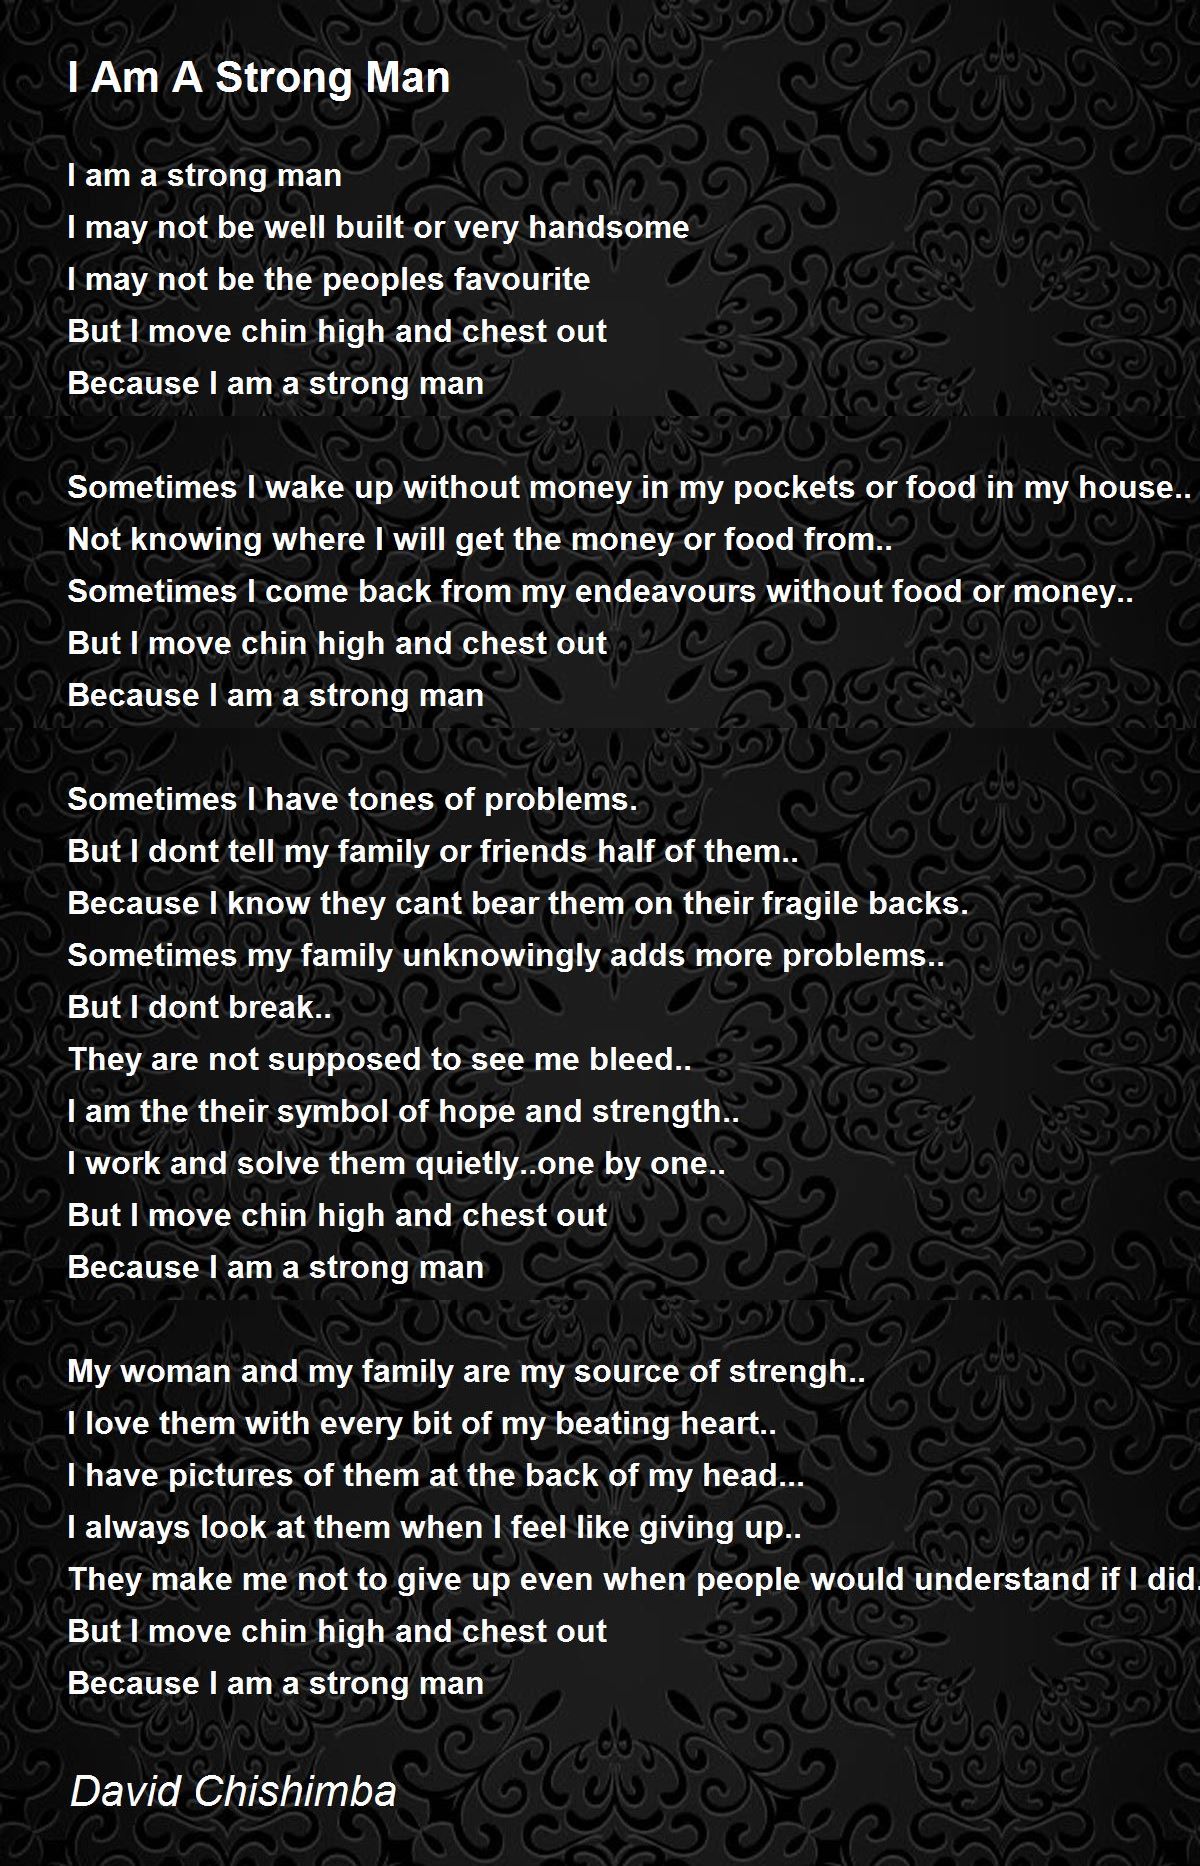 I Am A Strong Man by David Chishimba - I Am A Strong Man Poem